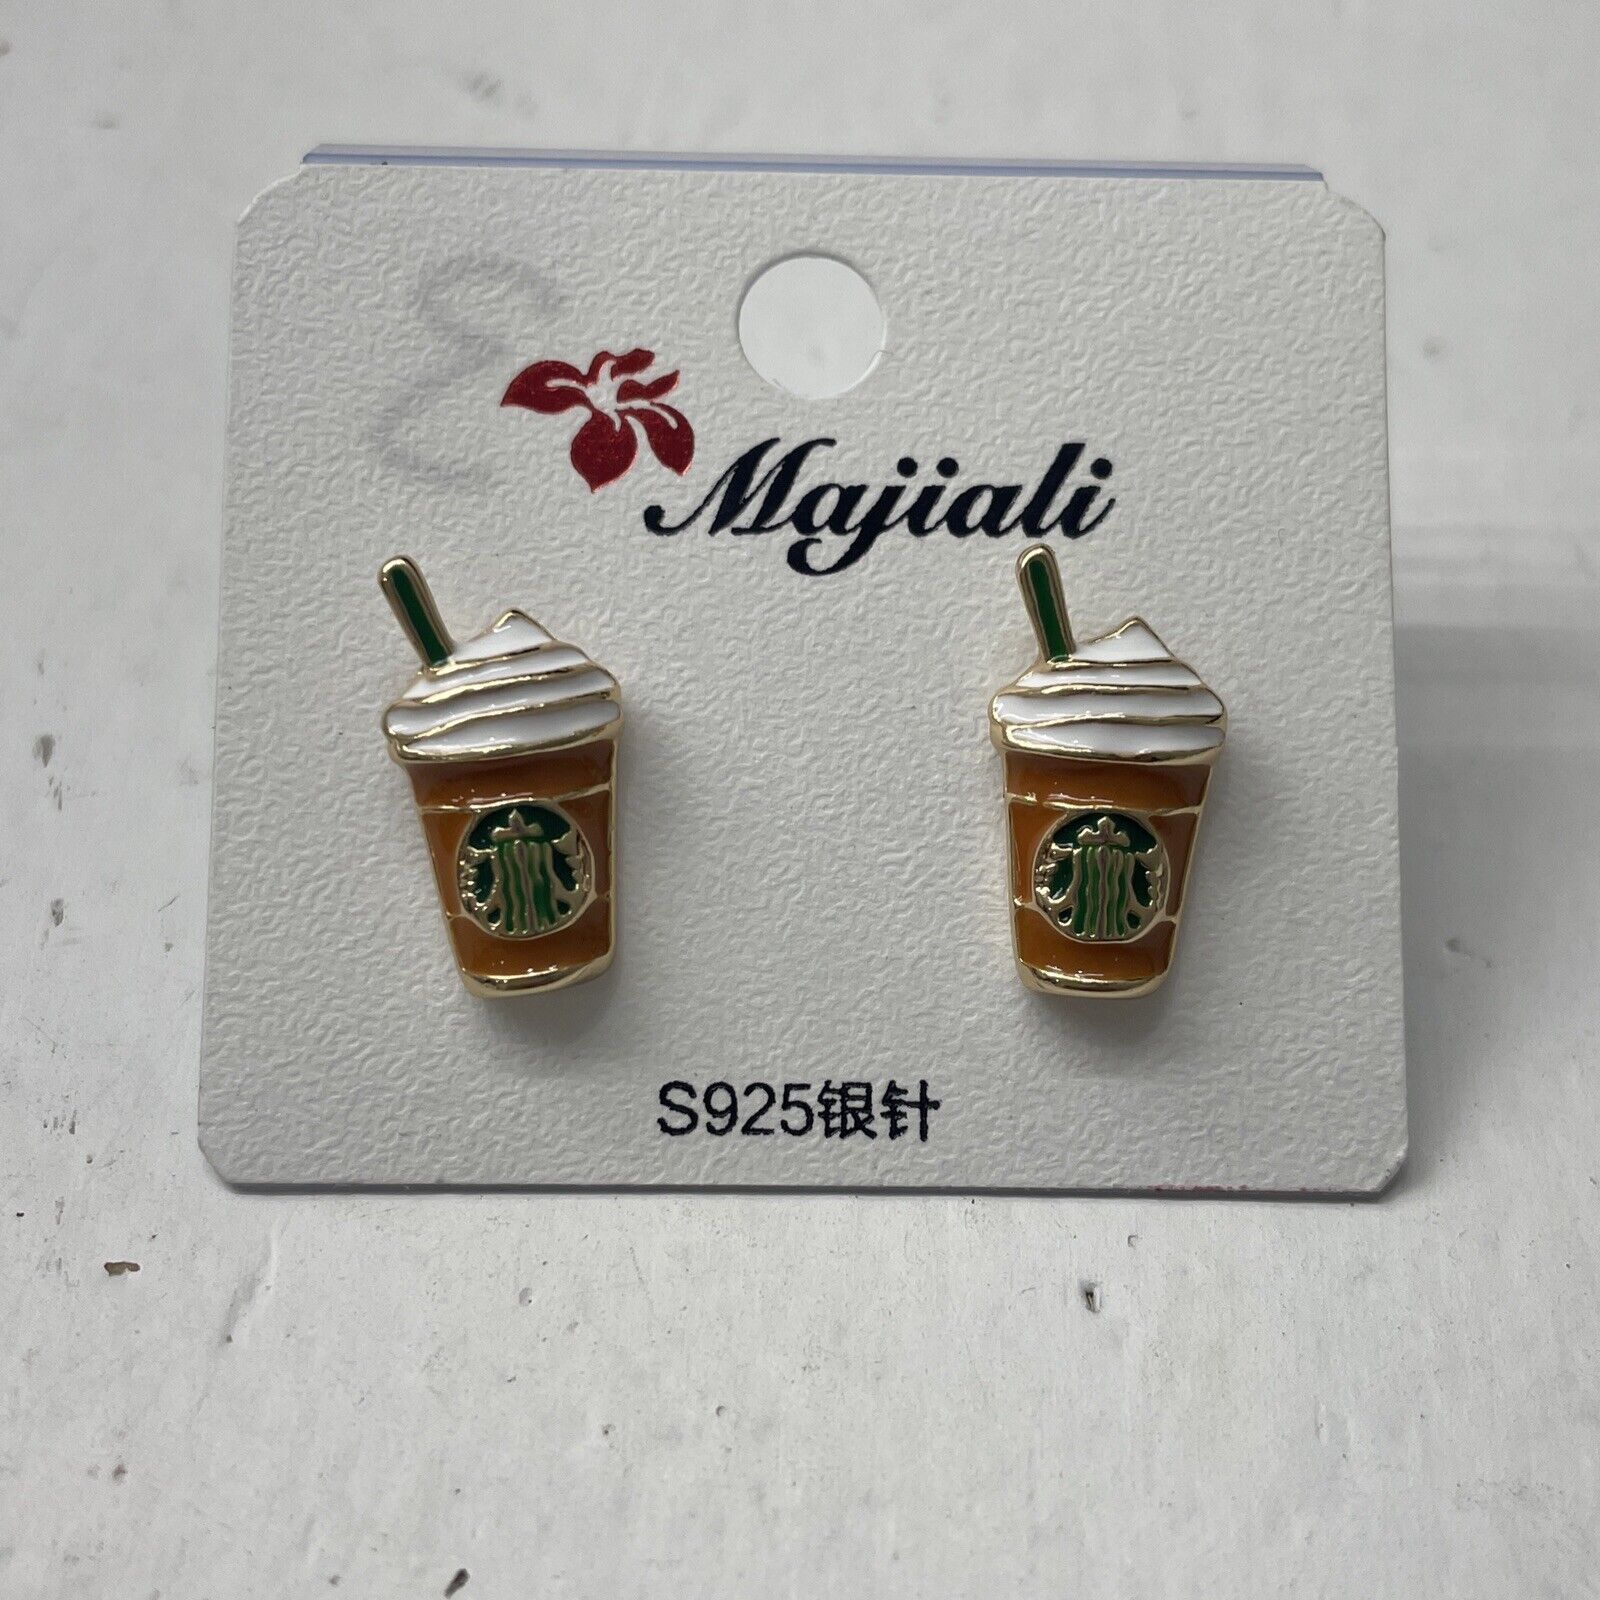 Majiali Frappuccino Starbucks Coffee Latte Stud Earrings NEW